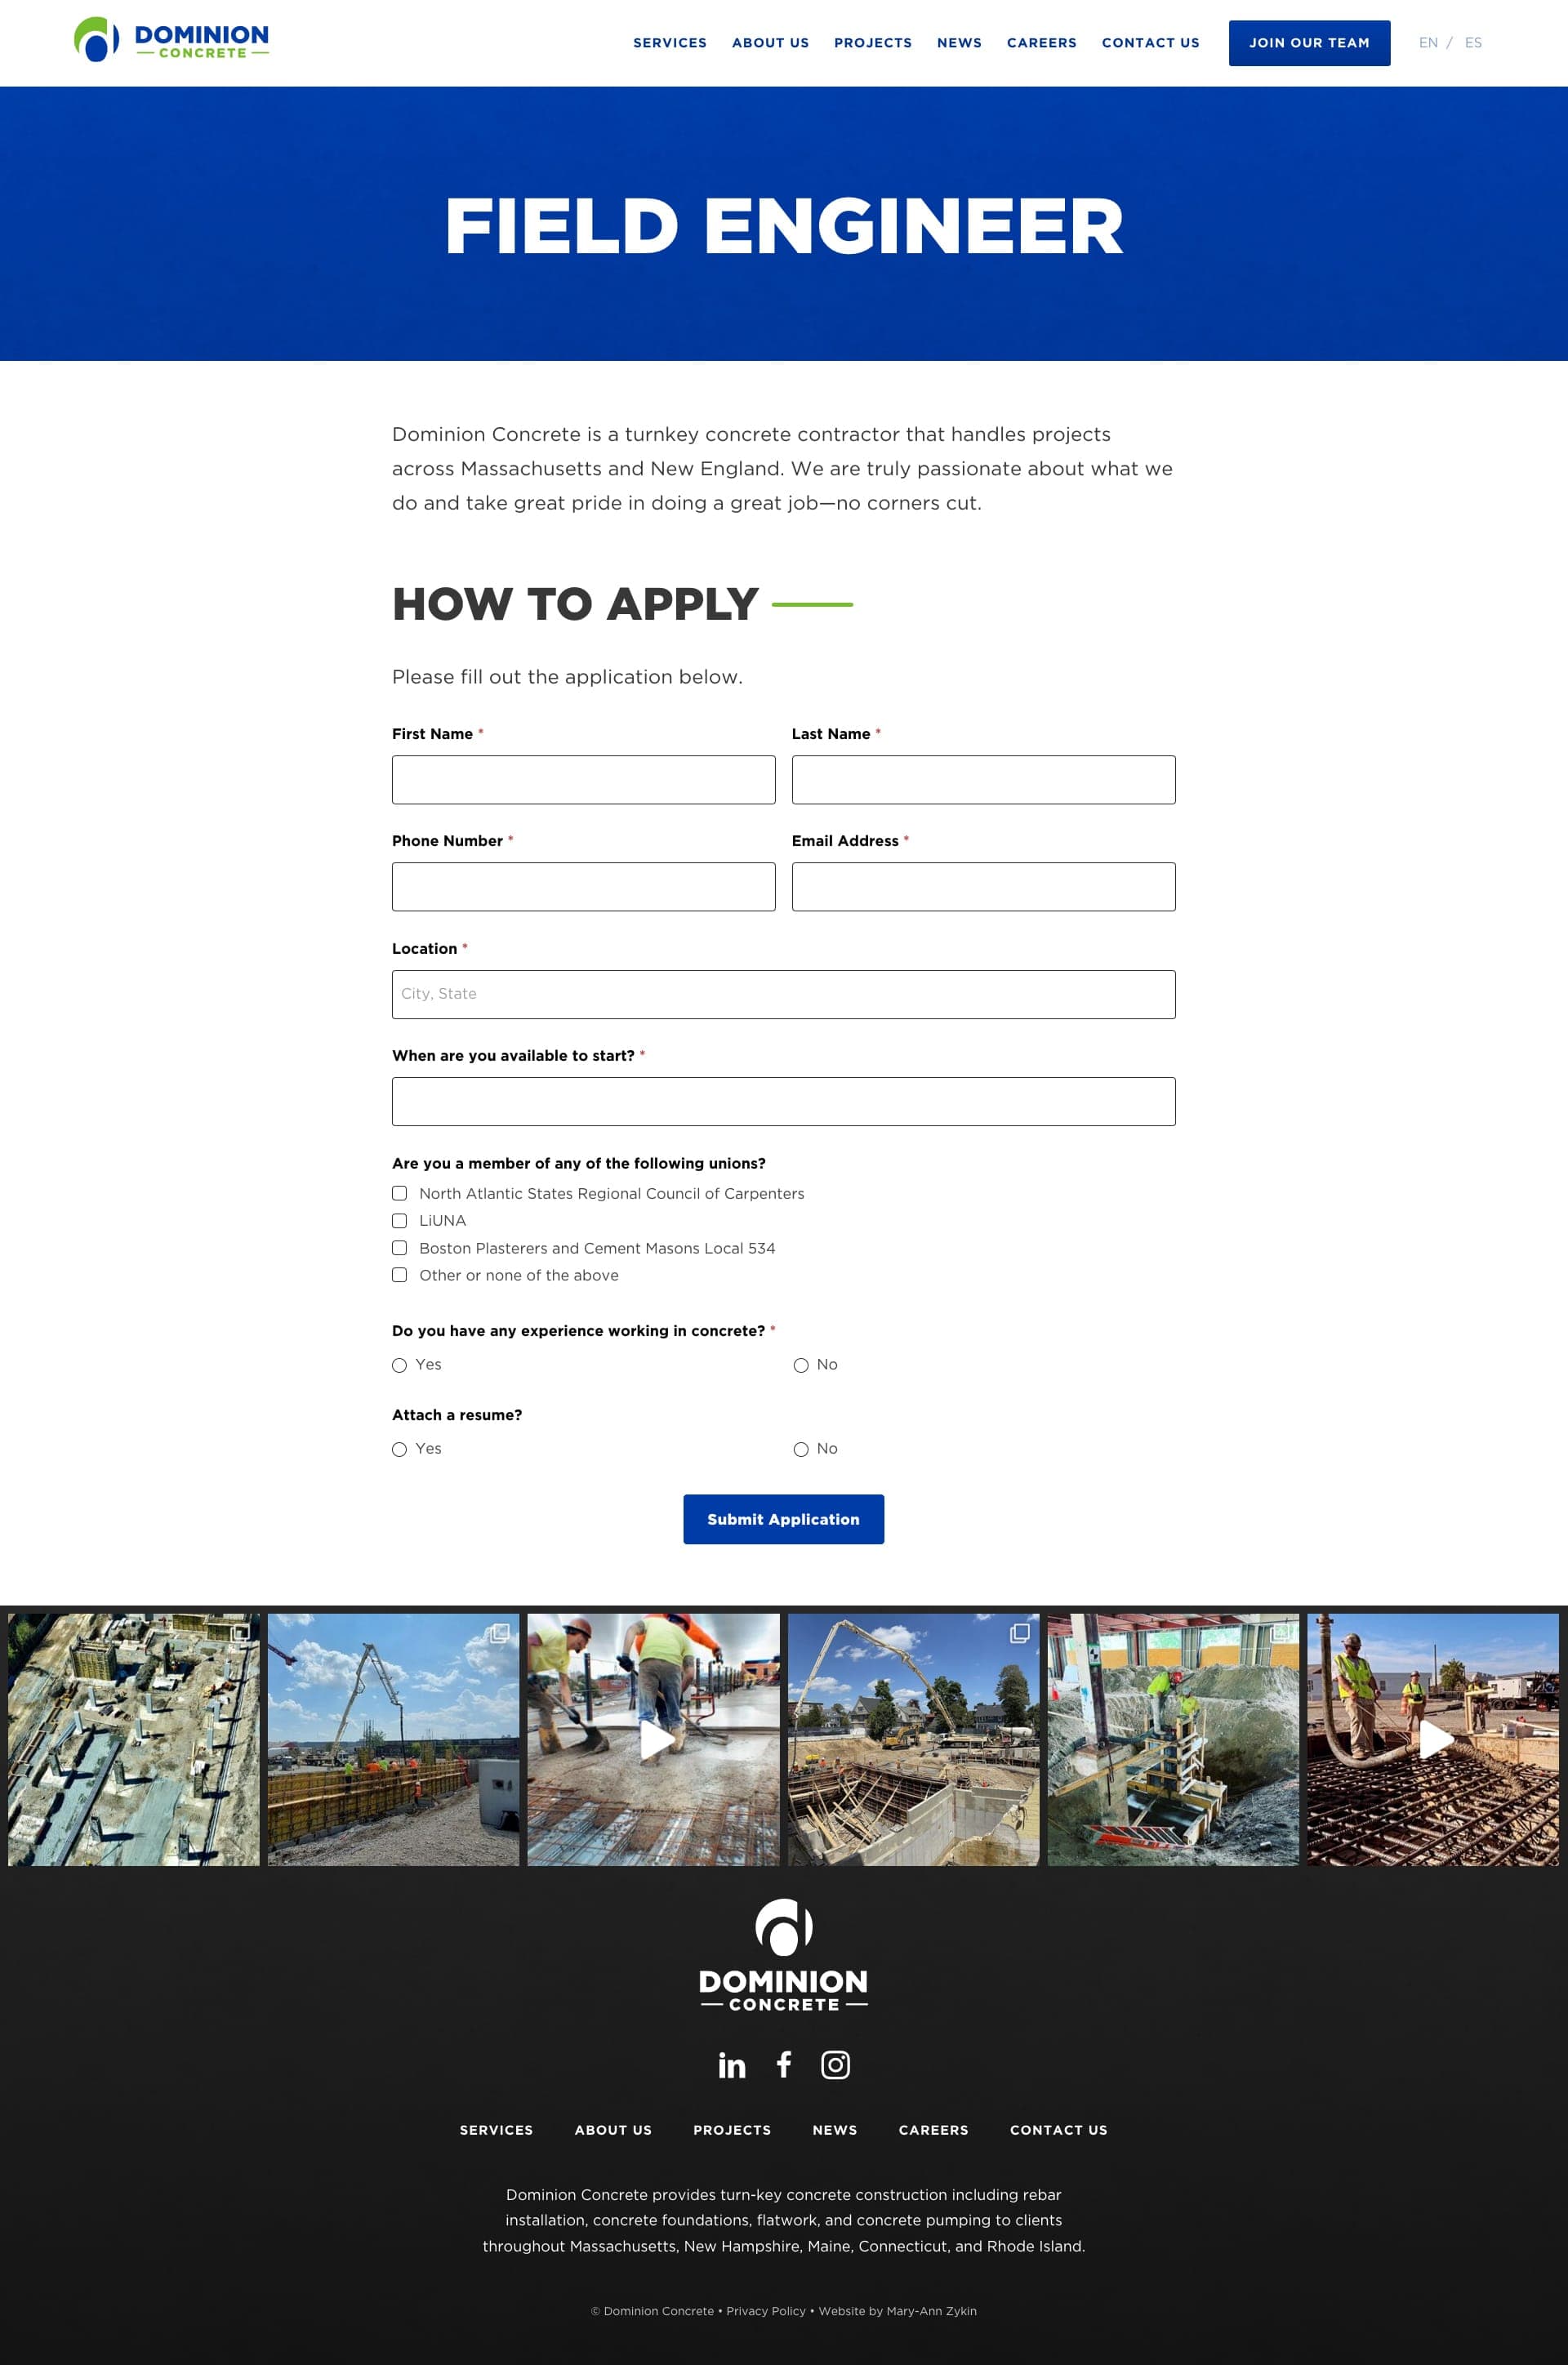 Dominion Concrete Job Application